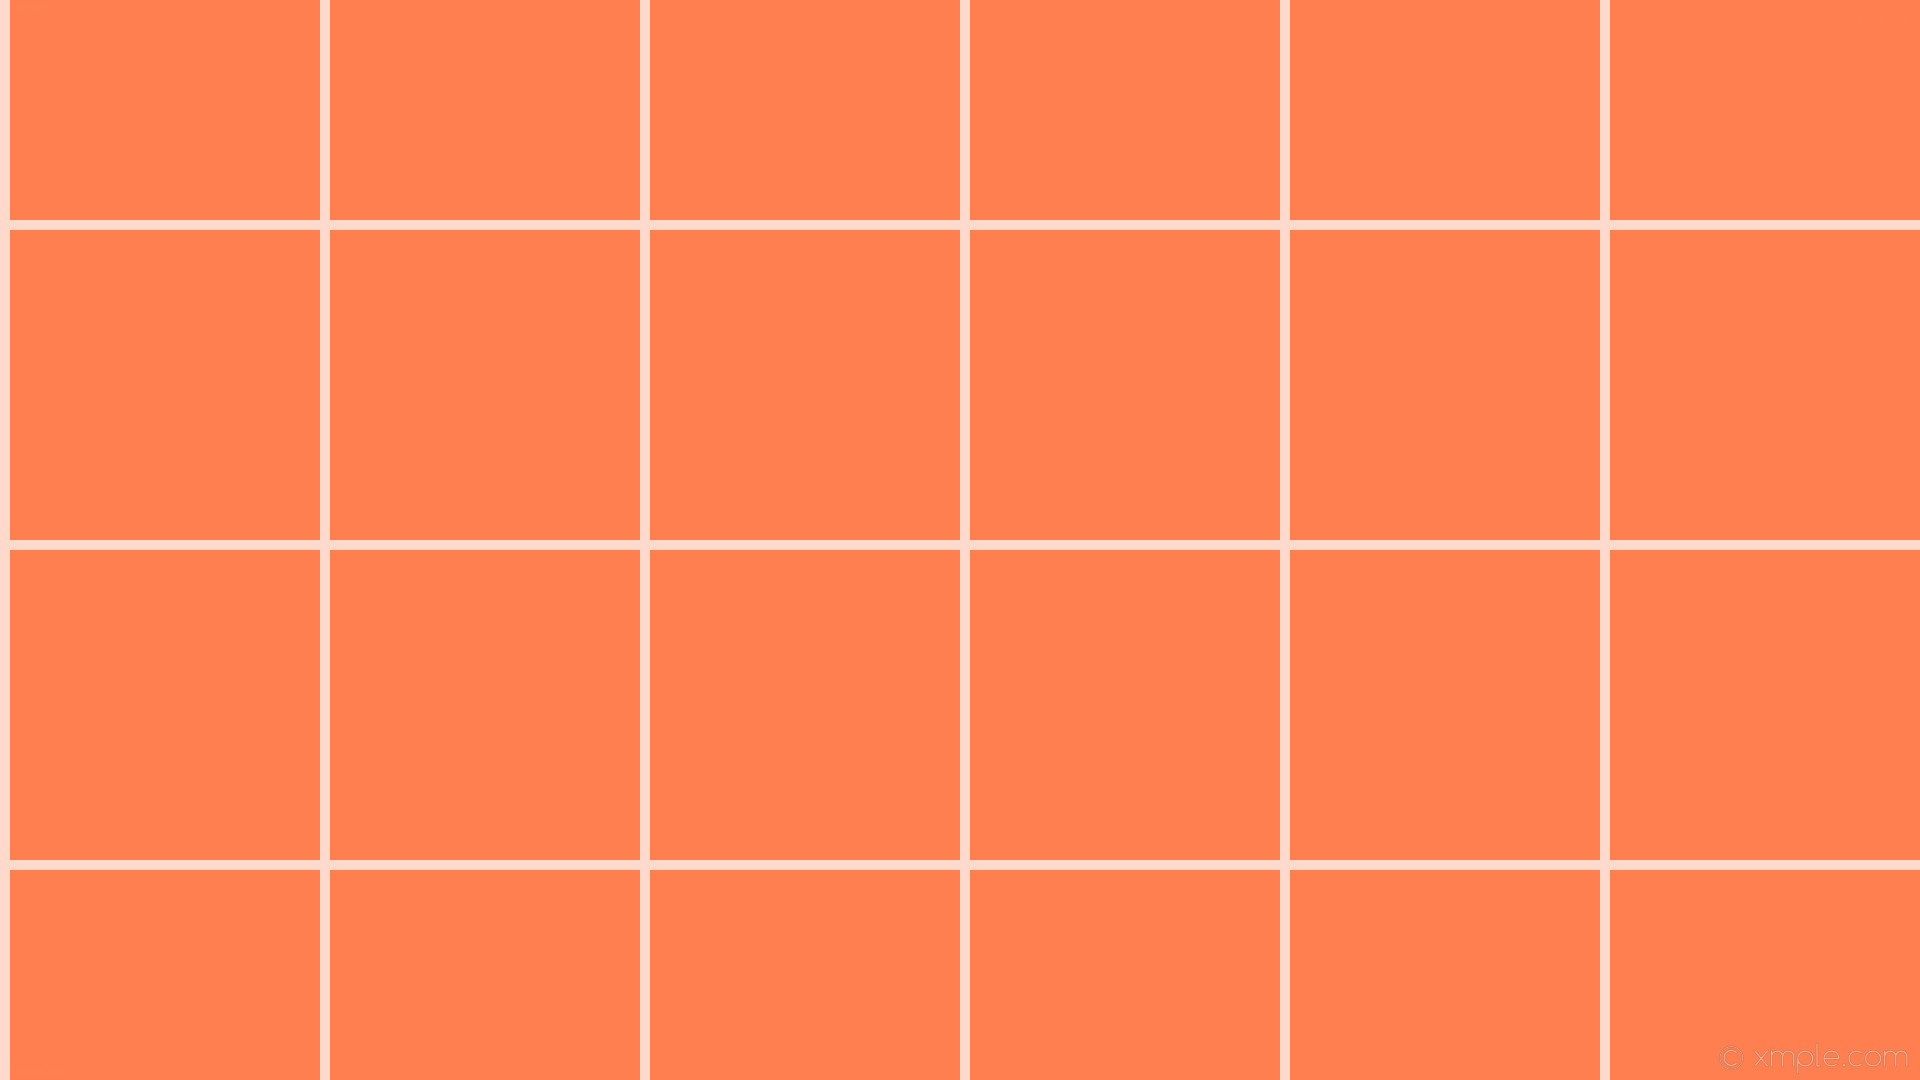 A grid of squares in orange and white - Pastel orange